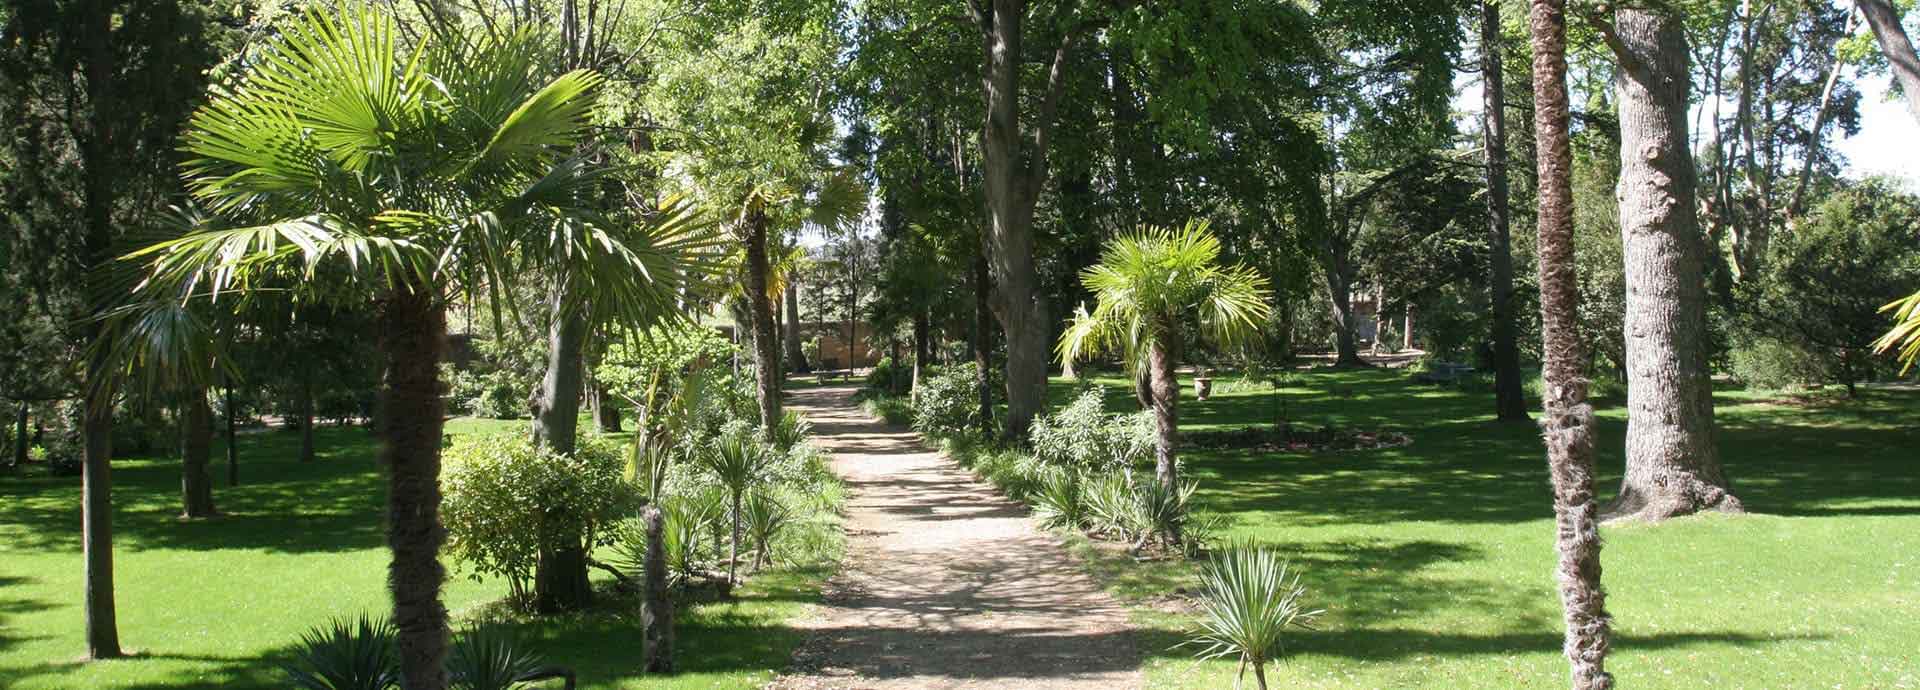 The garden in Domaine de la Vernède, holiday rental between Béziers and Narbonne